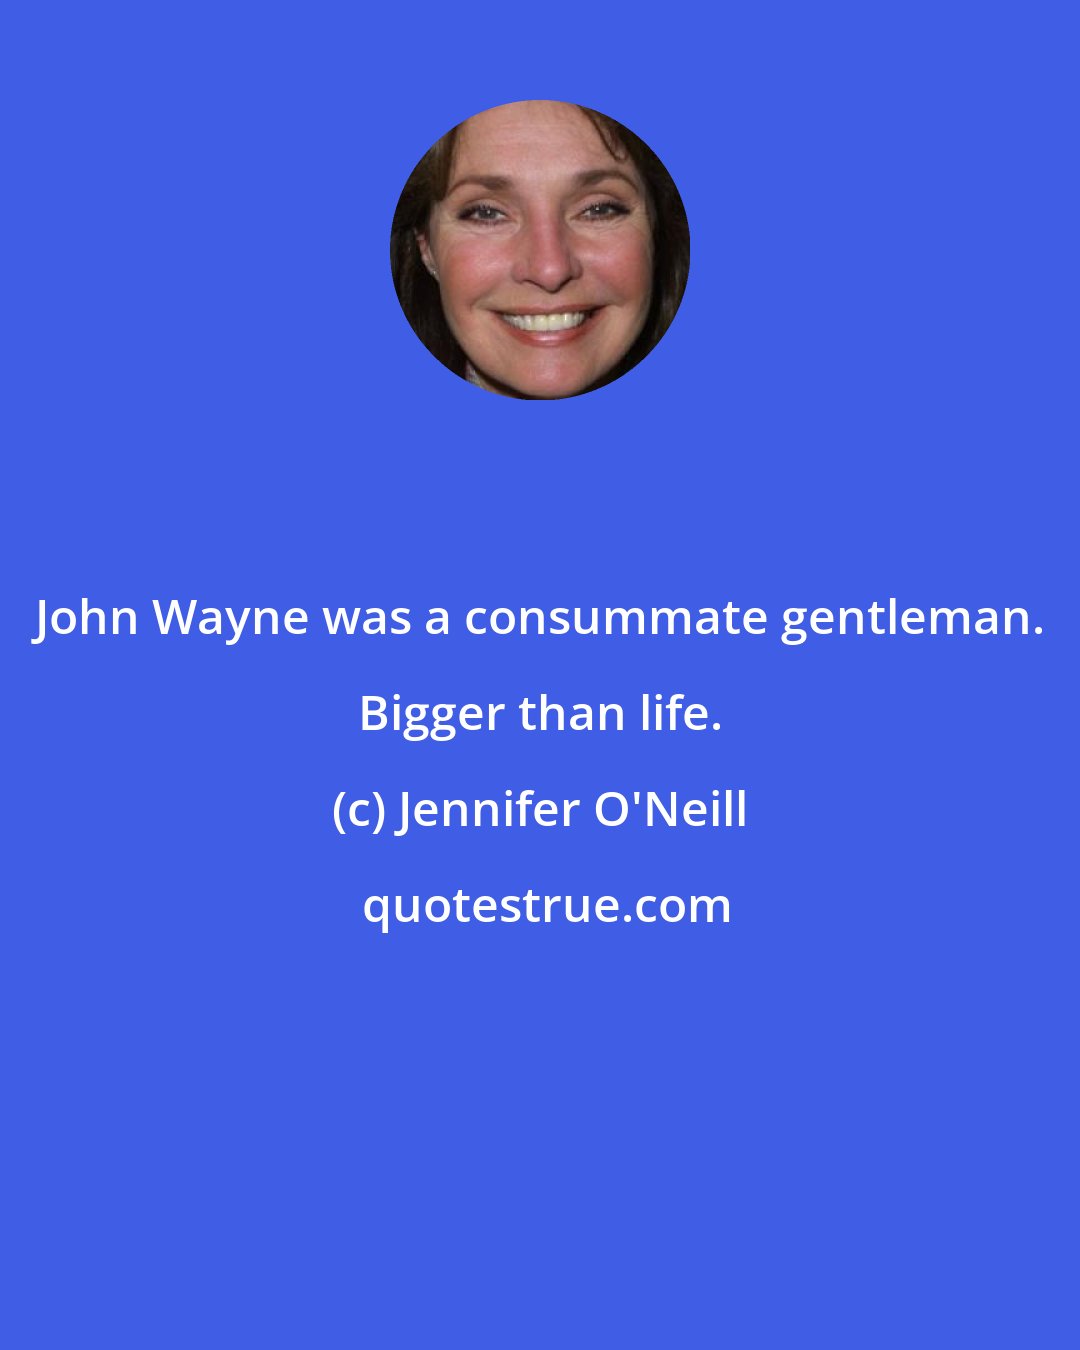 Jennifer O'Neill: John Wayne was a consummate gentleman. Bigger than life.